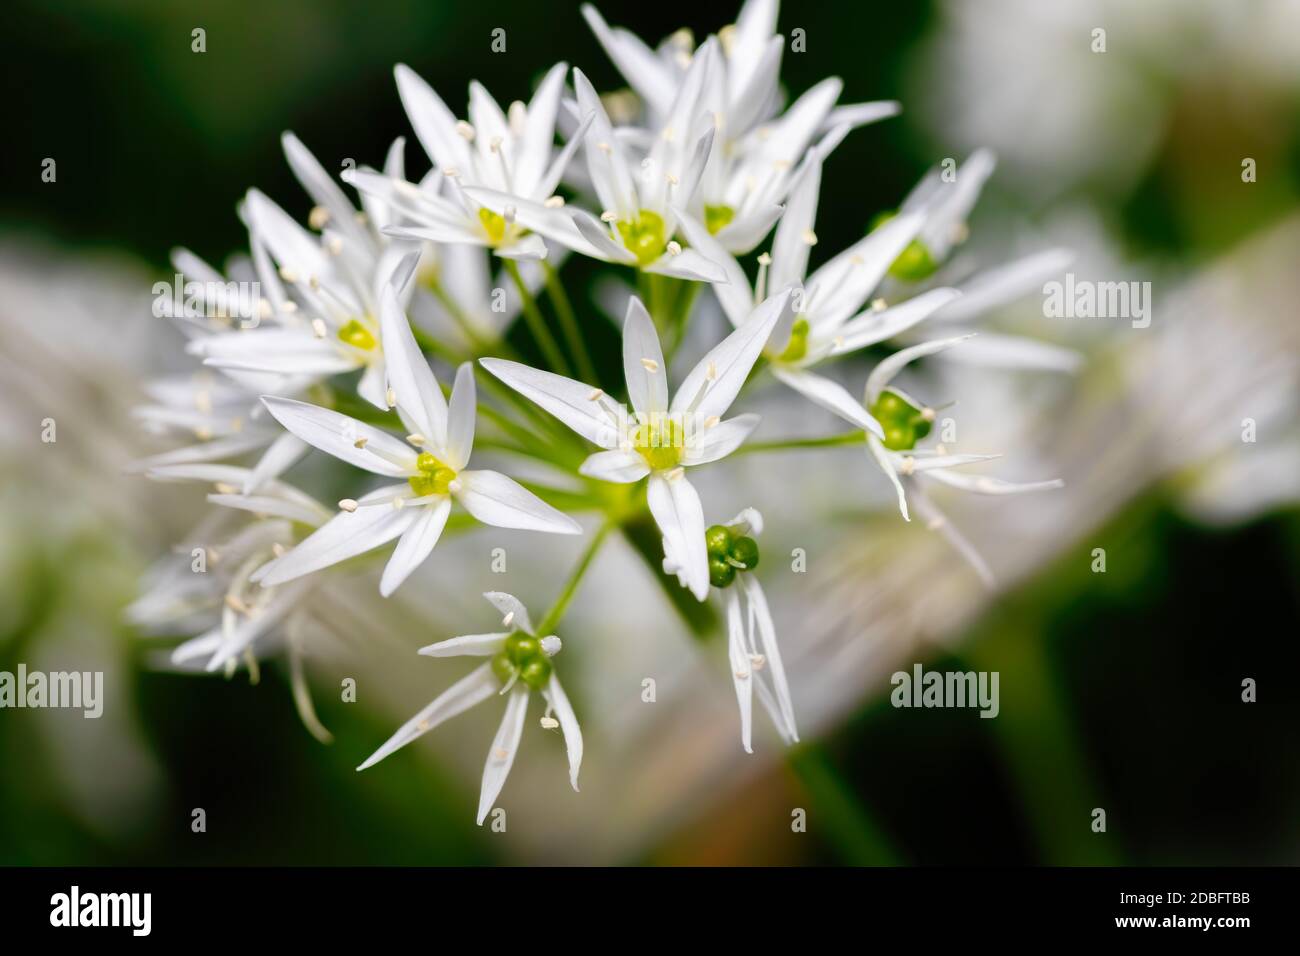 Flowering wild garlic leek (Allium ursine) in the spring garden. healthy ingredients for cooking Stock Photo